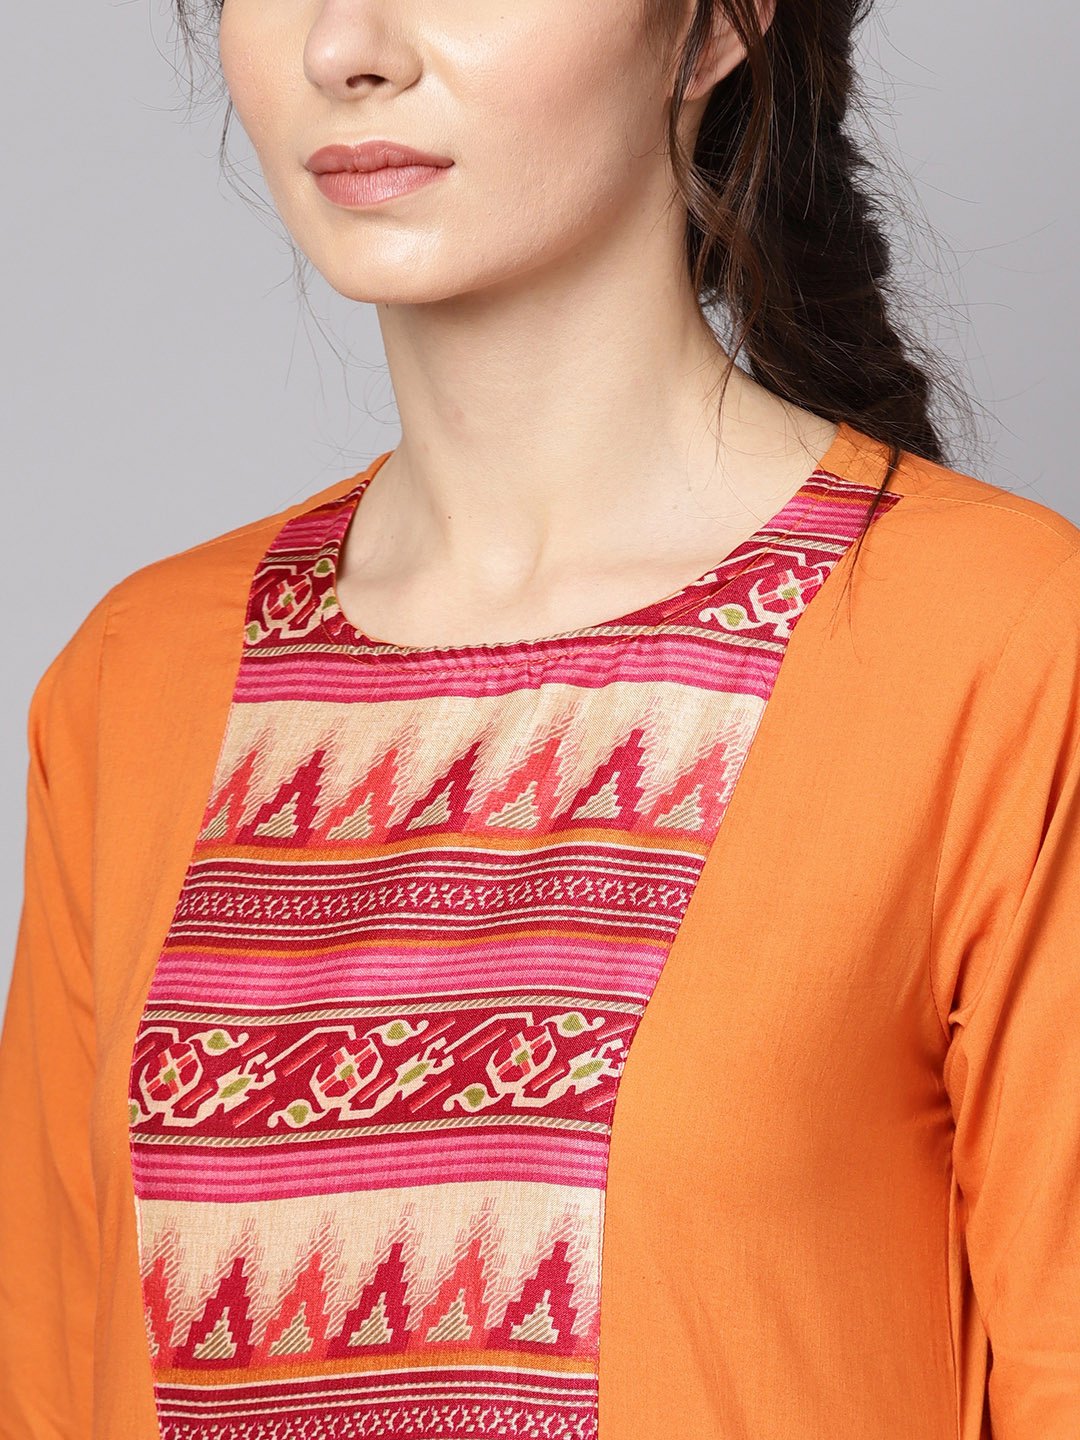 Women's Orange & Pink Printed Kurta With Palazzos & Dupatta - Nayo Clothing